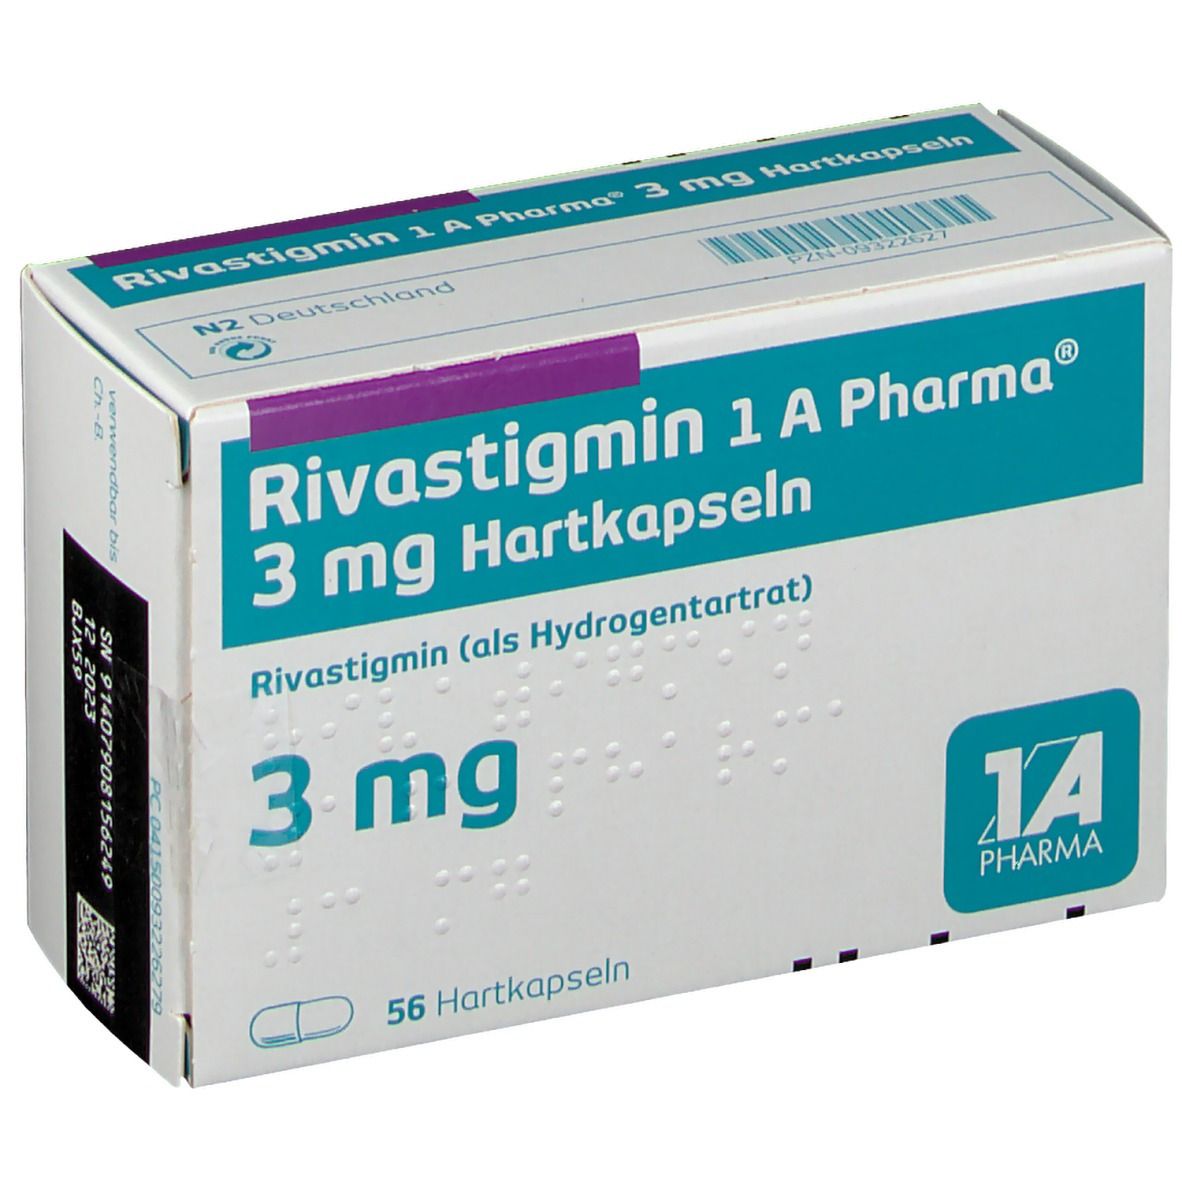 Rivastigmin 1 A Pharma® 3 mg